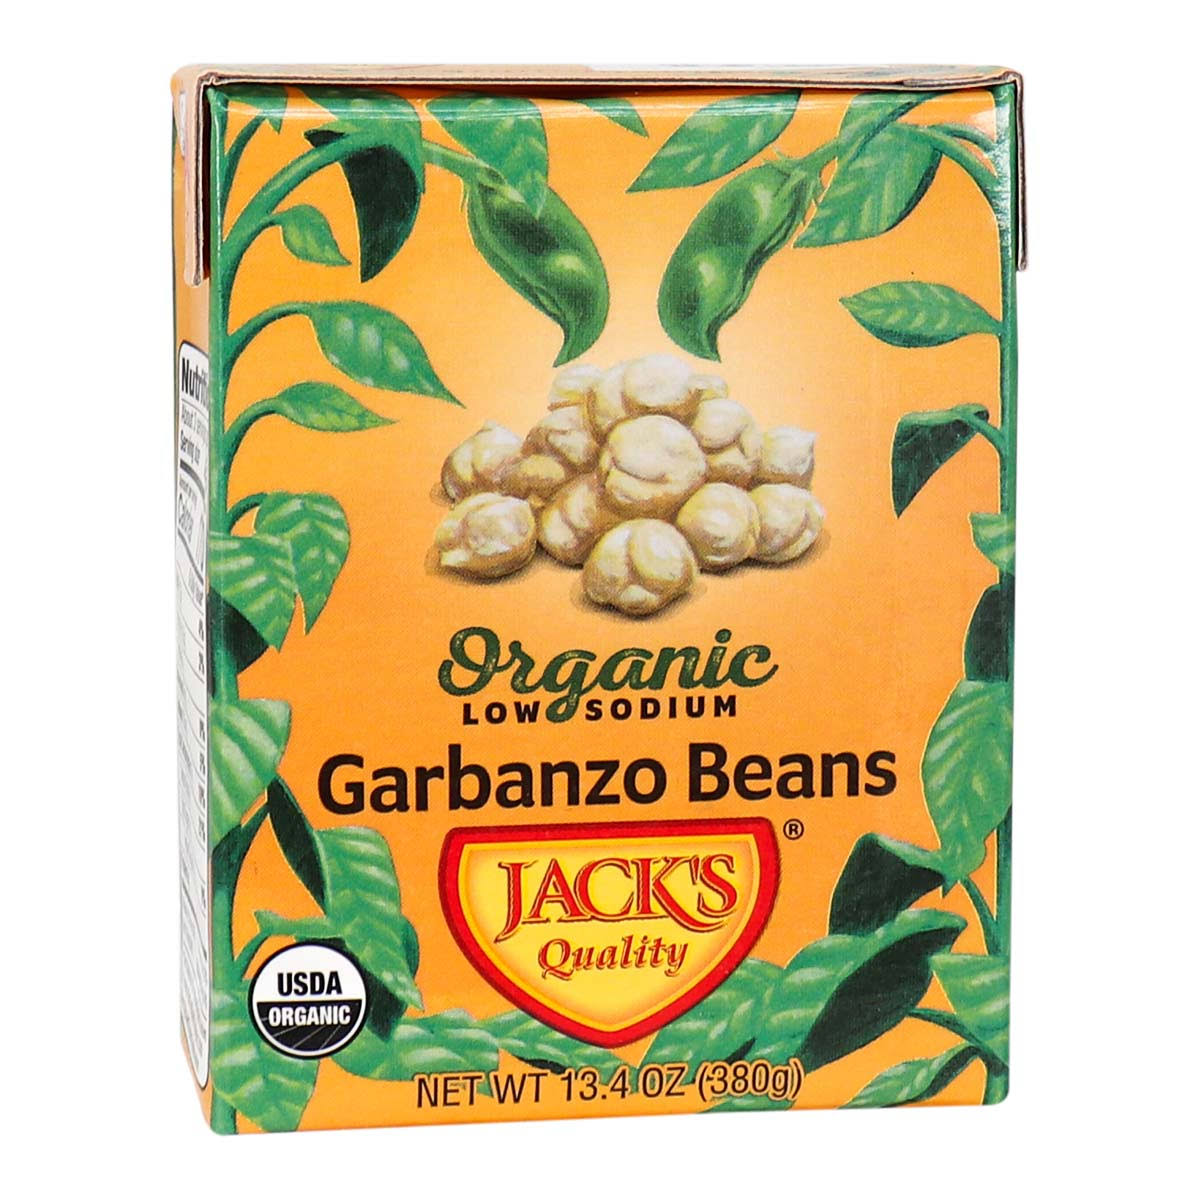 Jack's Quality Organic Garbanzo Beans - Low Sodium, 13.4oz